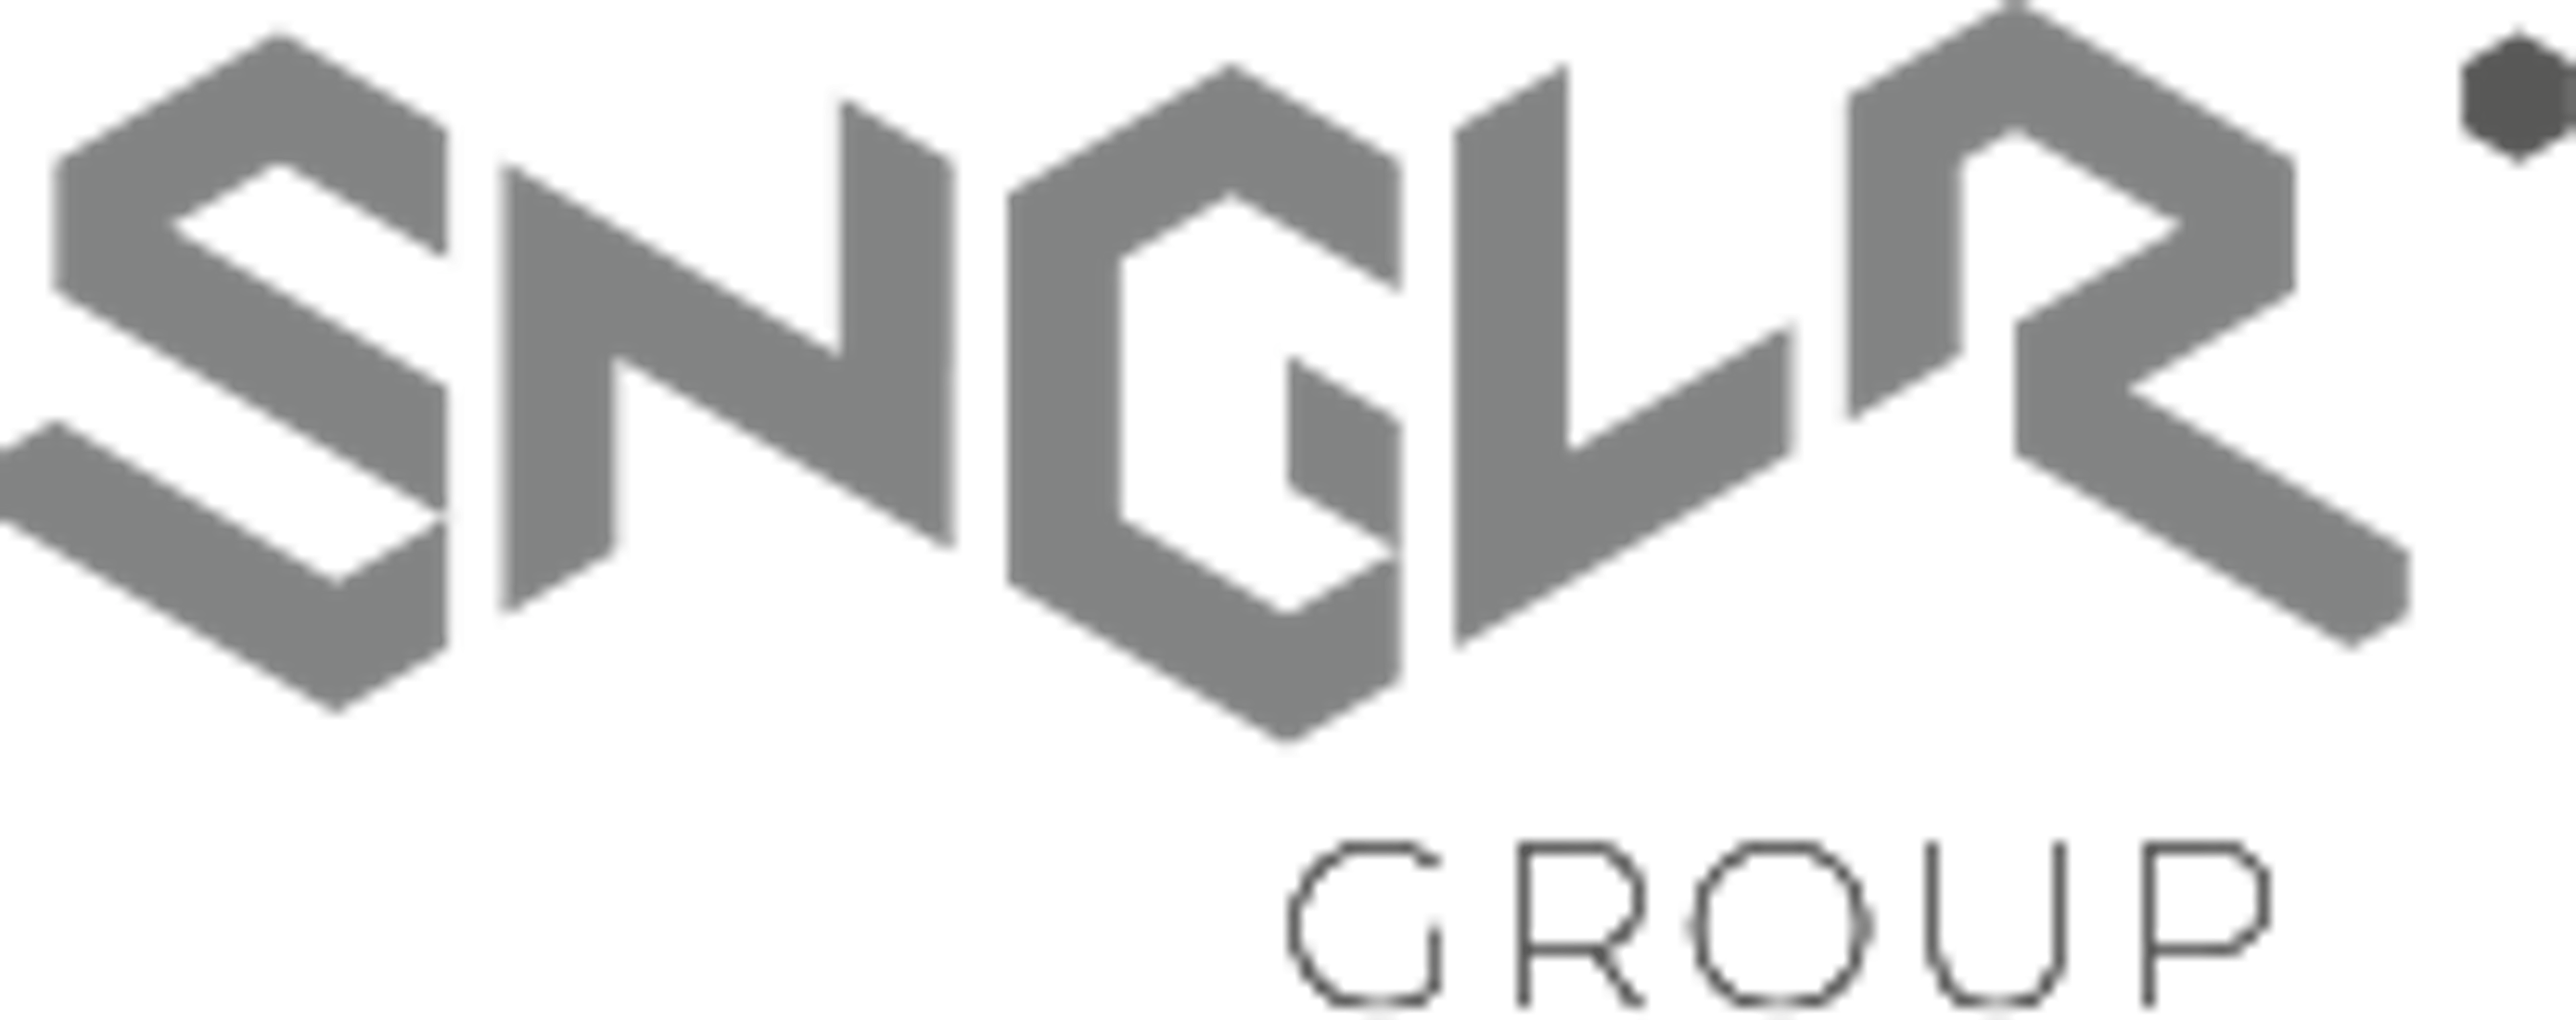 SNLRG Group Logo